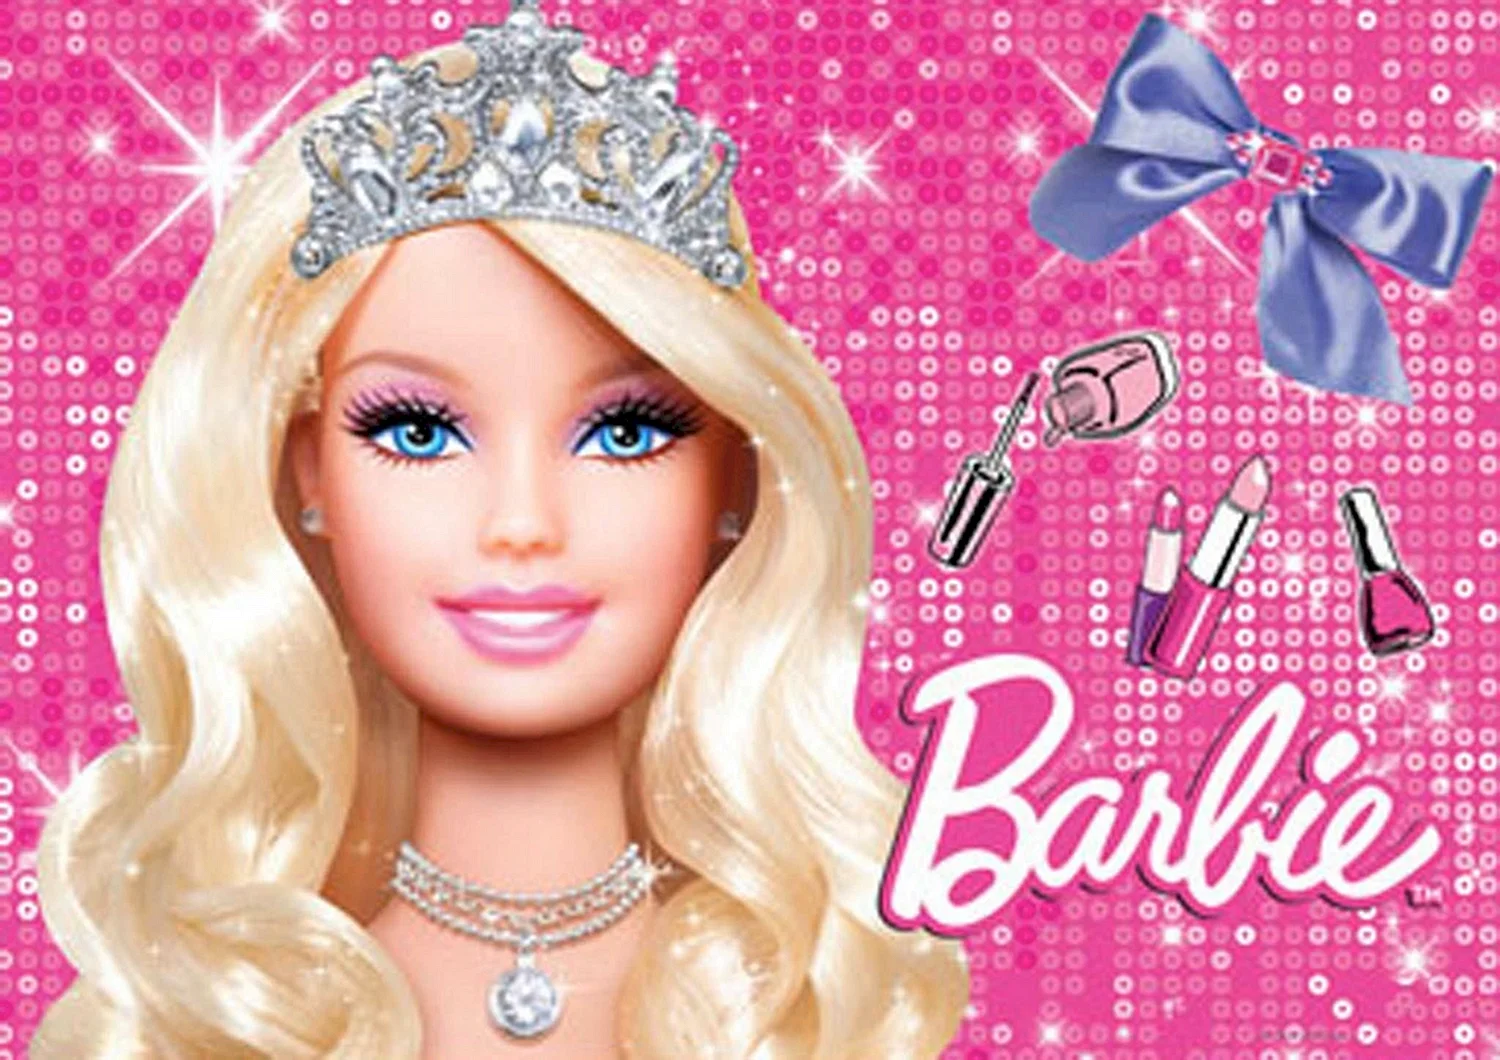 Полное имя куклы Барби - Барбара Миллисент Робертс.